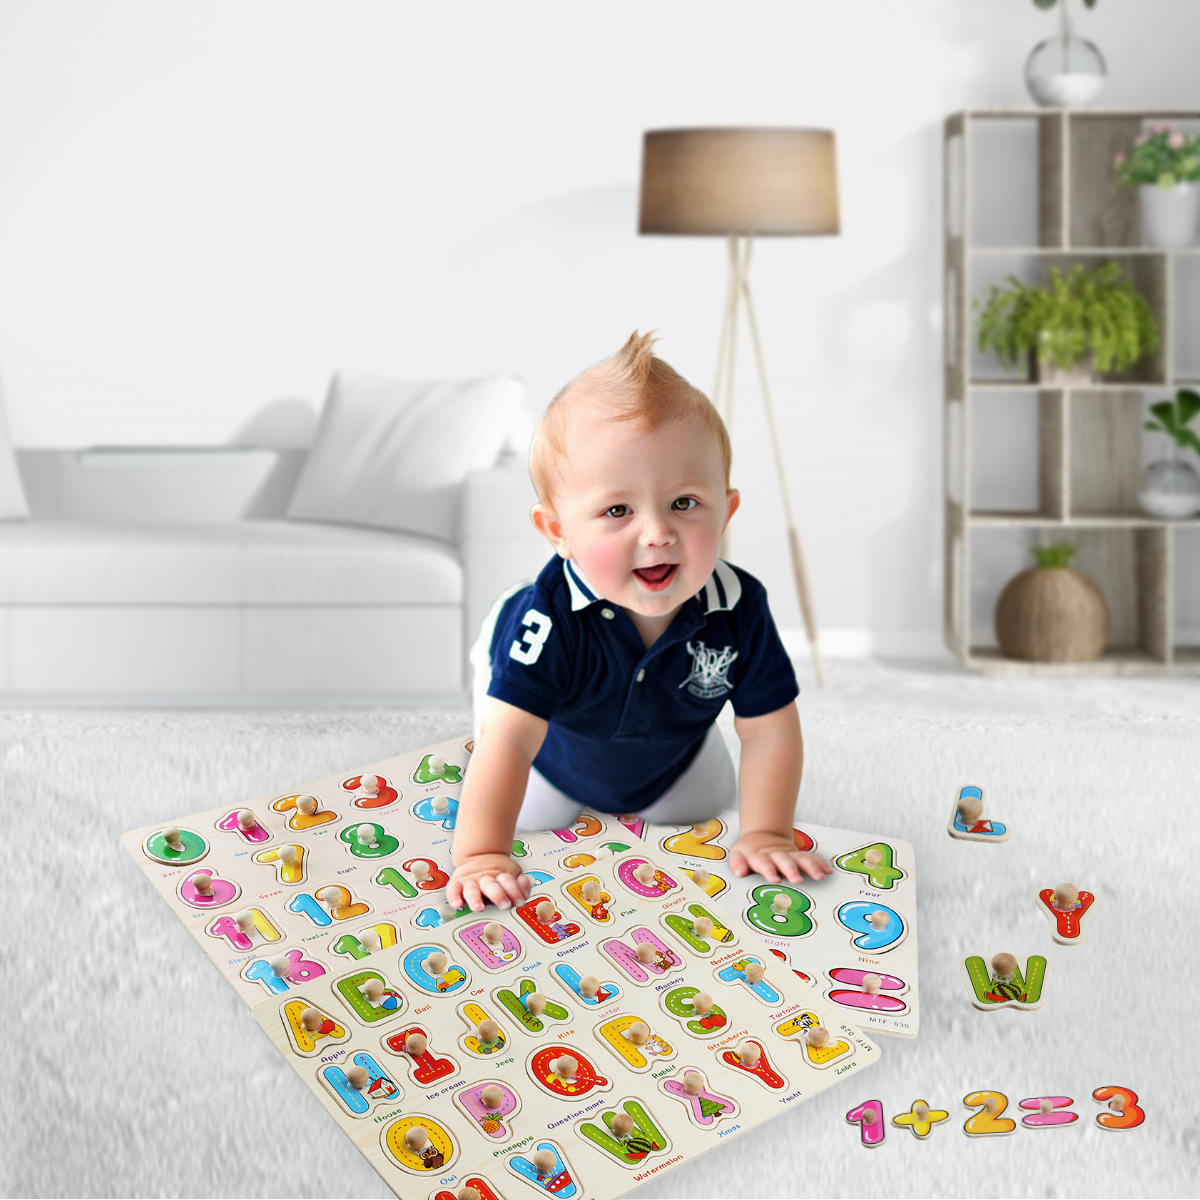 Colorful-Wooden-AlphabetMathNumber-Jigsaw-Puzzle-Toy-Intelligence-Early-Education-Toys-1678180-2